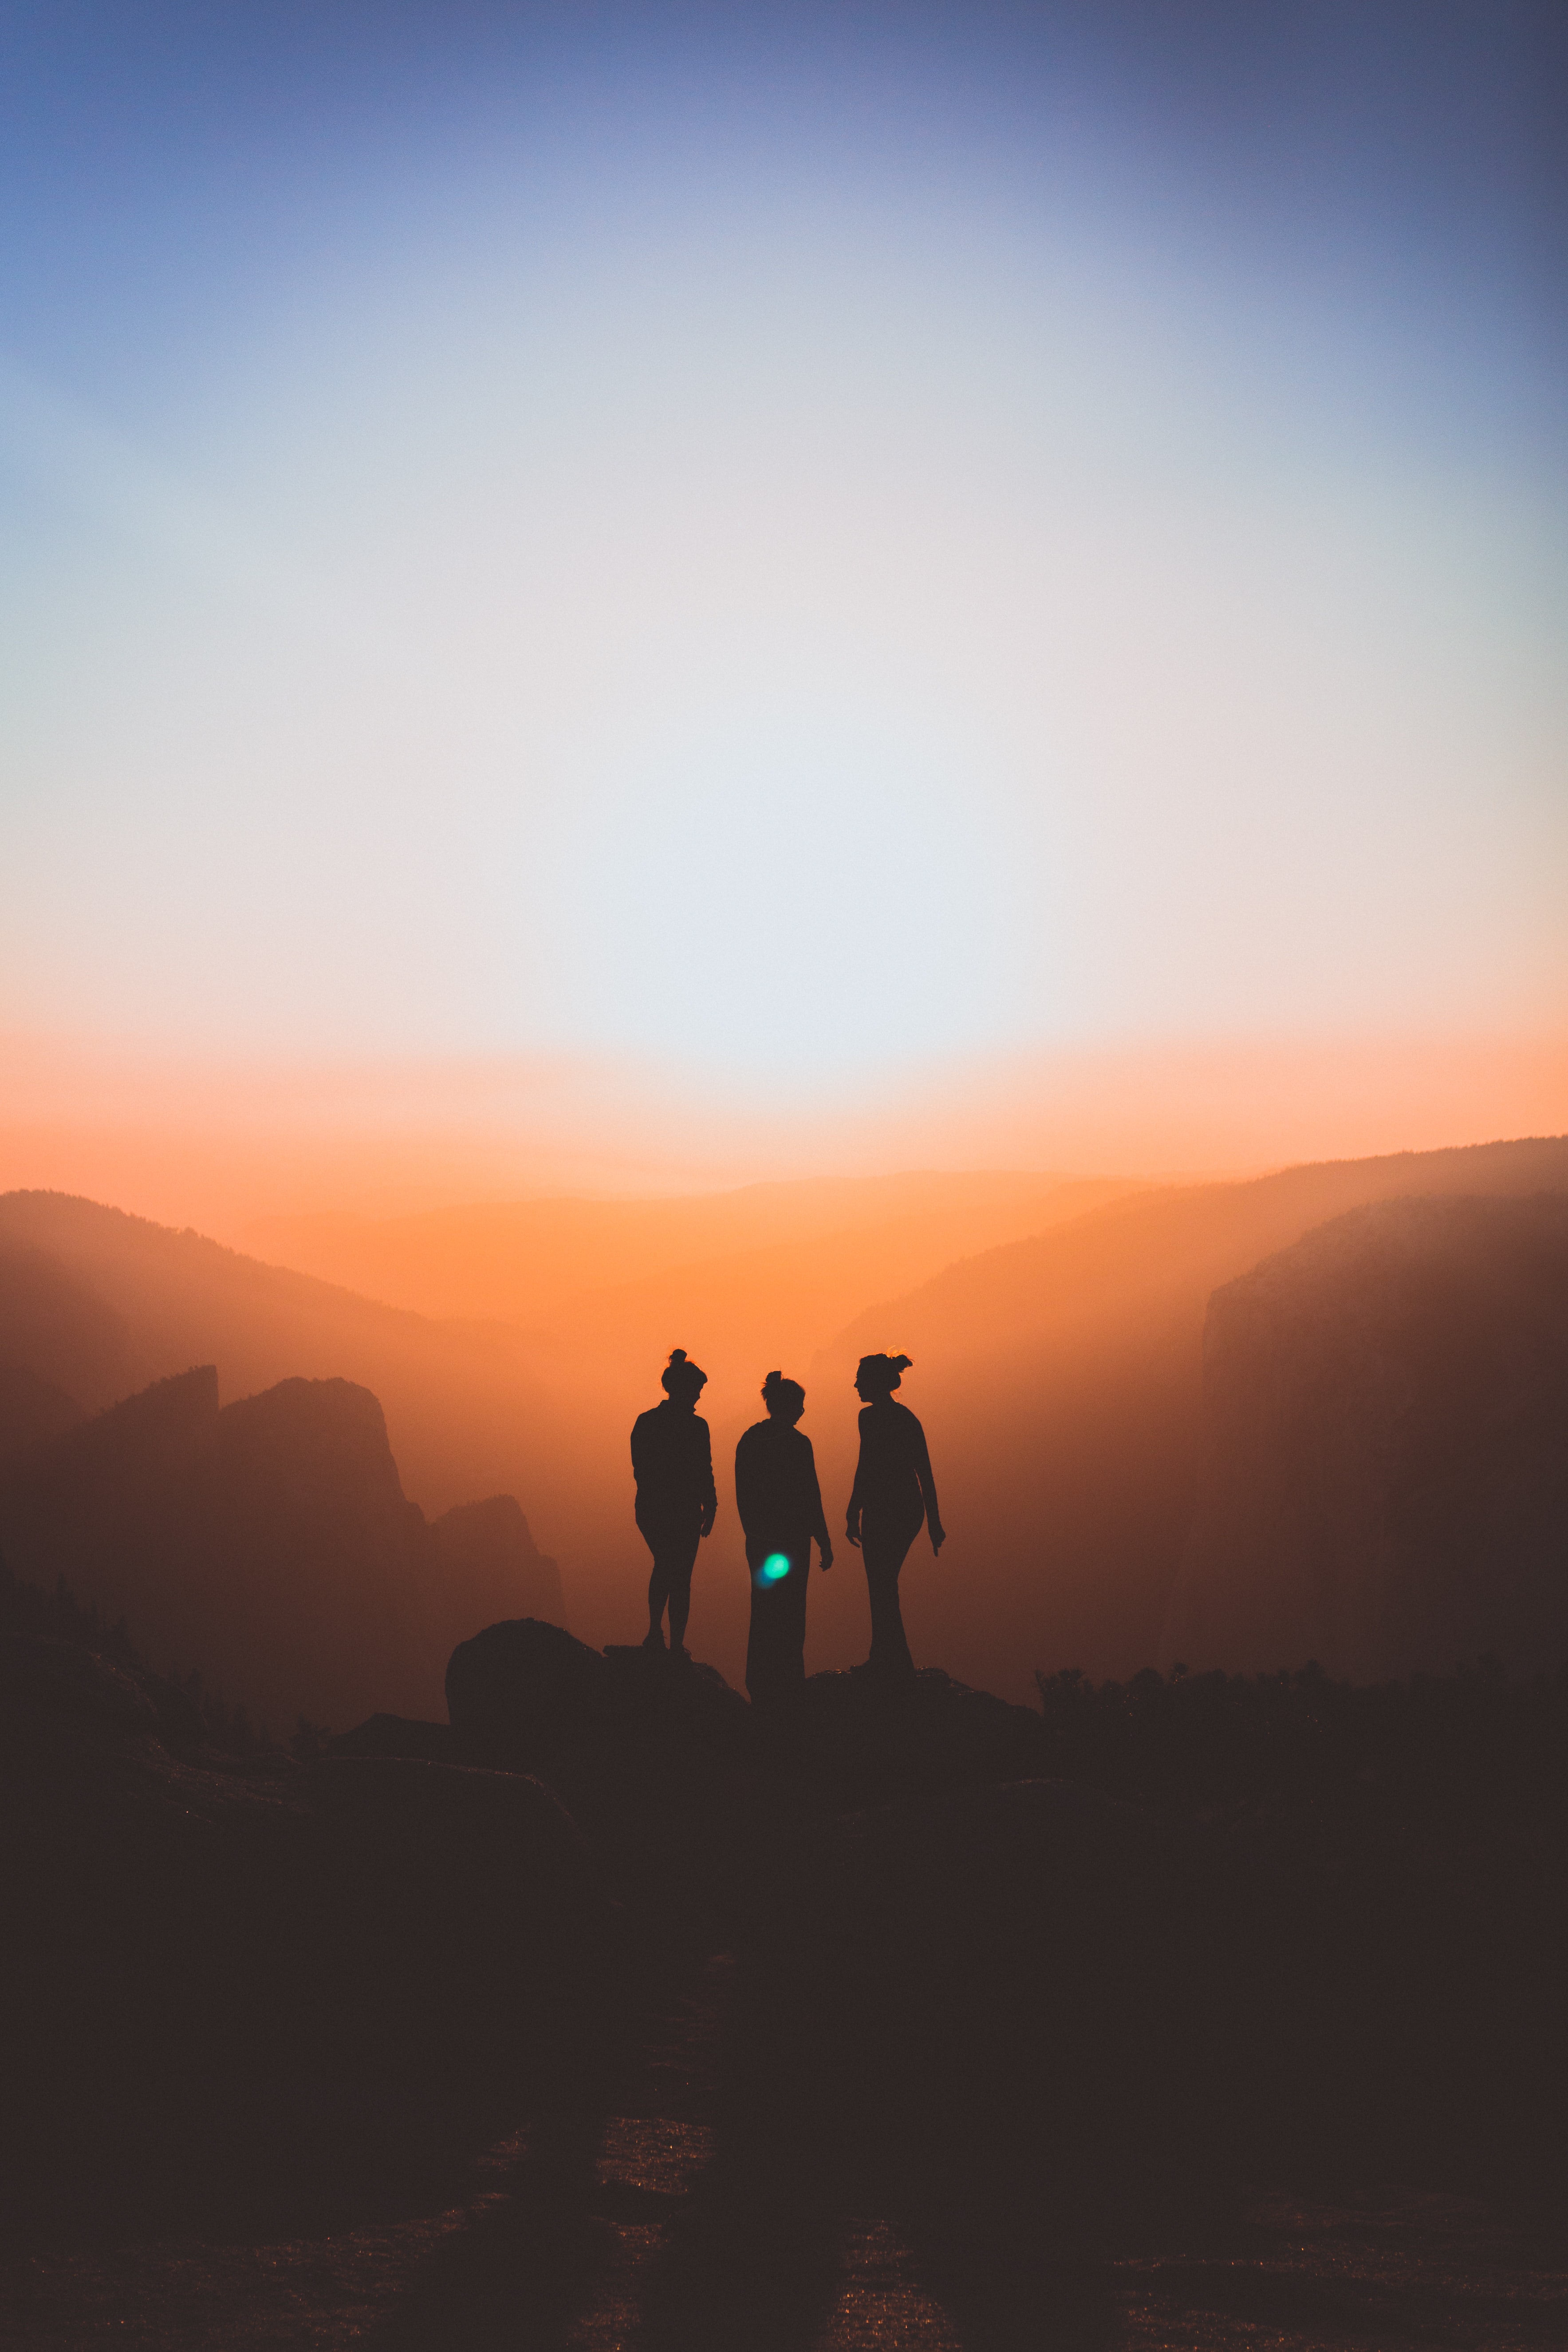 Silhouette of three women on a mountain; image by Karl Magnuson, via Unsplash.com.